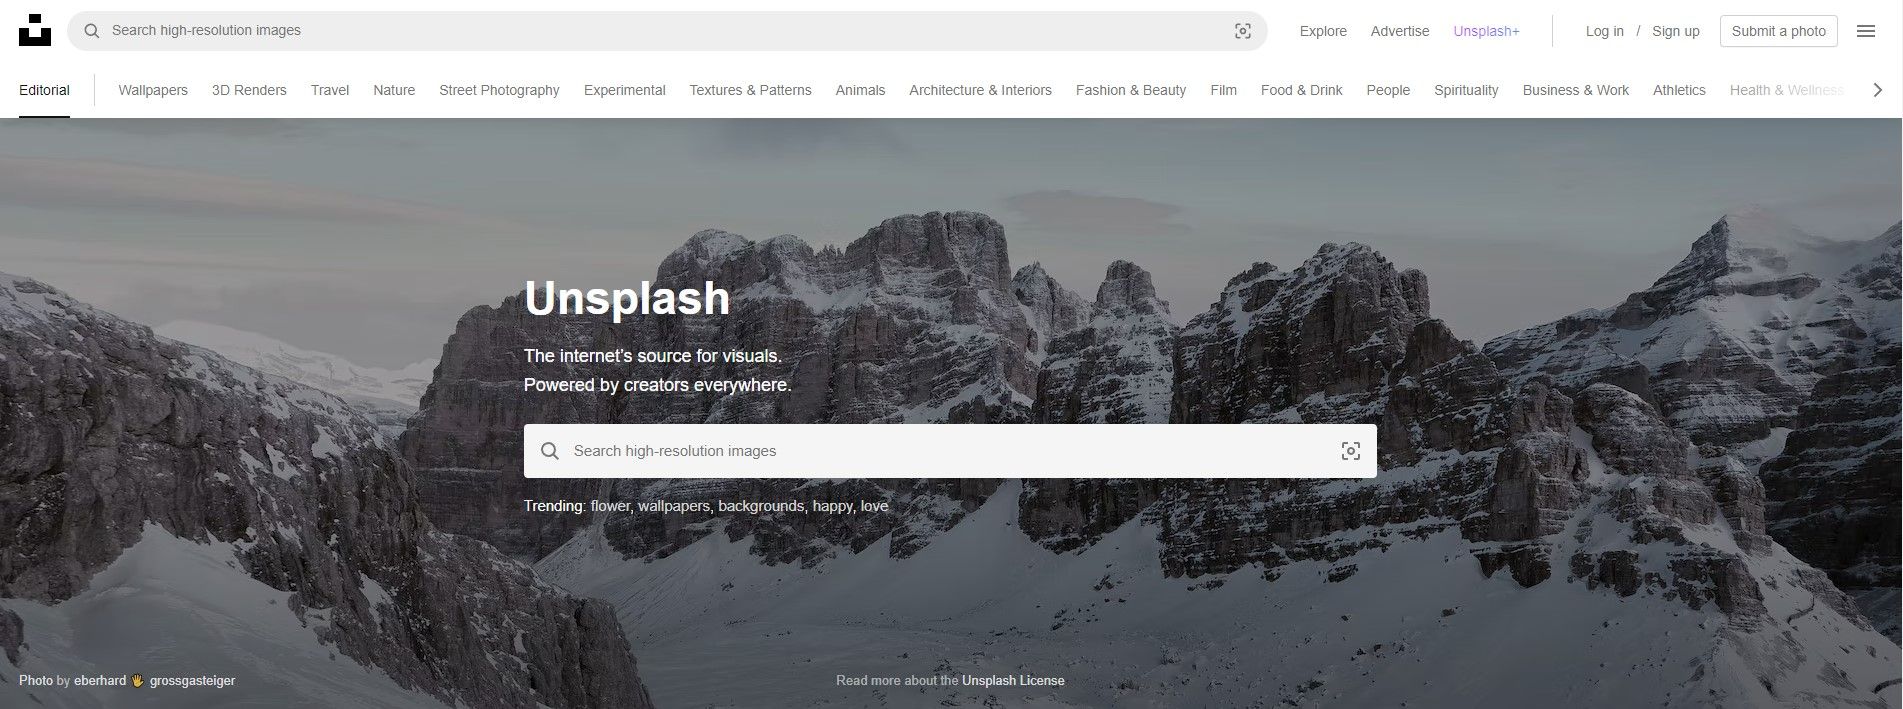 Unsplash website homepage screenshot